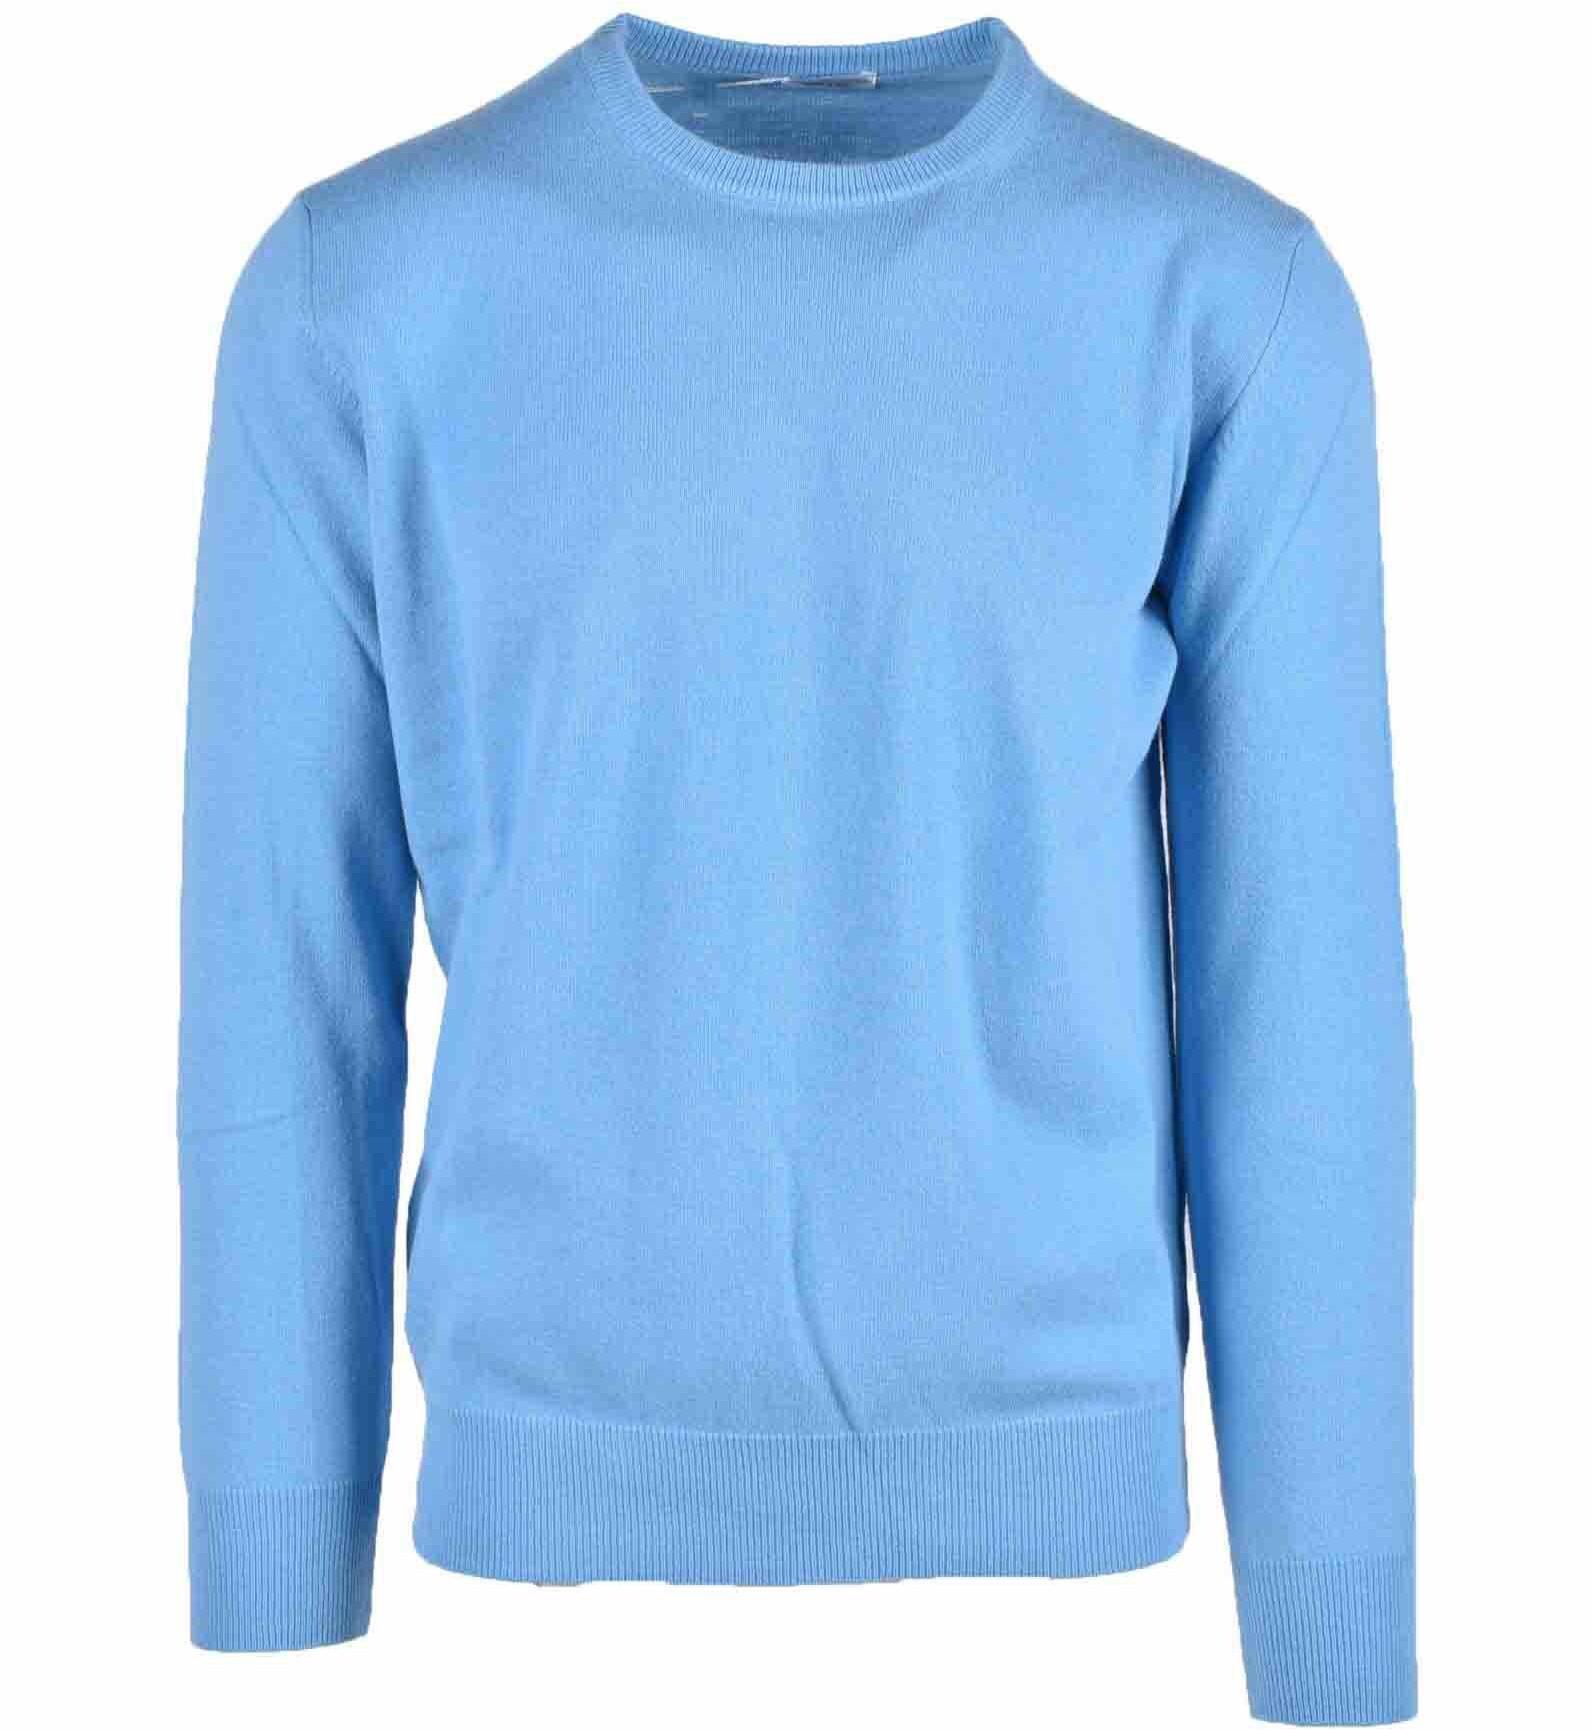 Sky Blue Sweater 3XL at FORZIERI